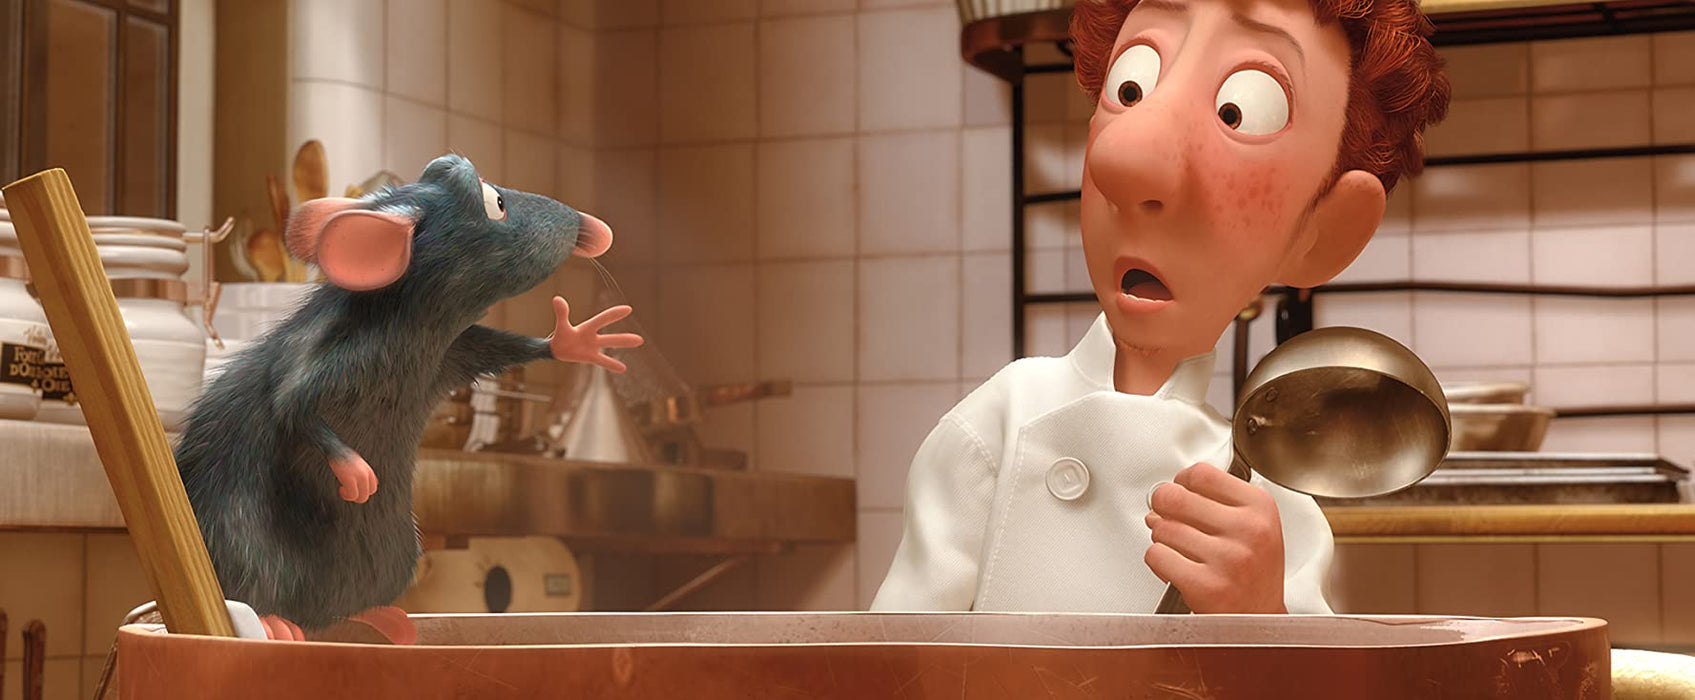 Disney Pixar's Ratatouille [Blu-ray]